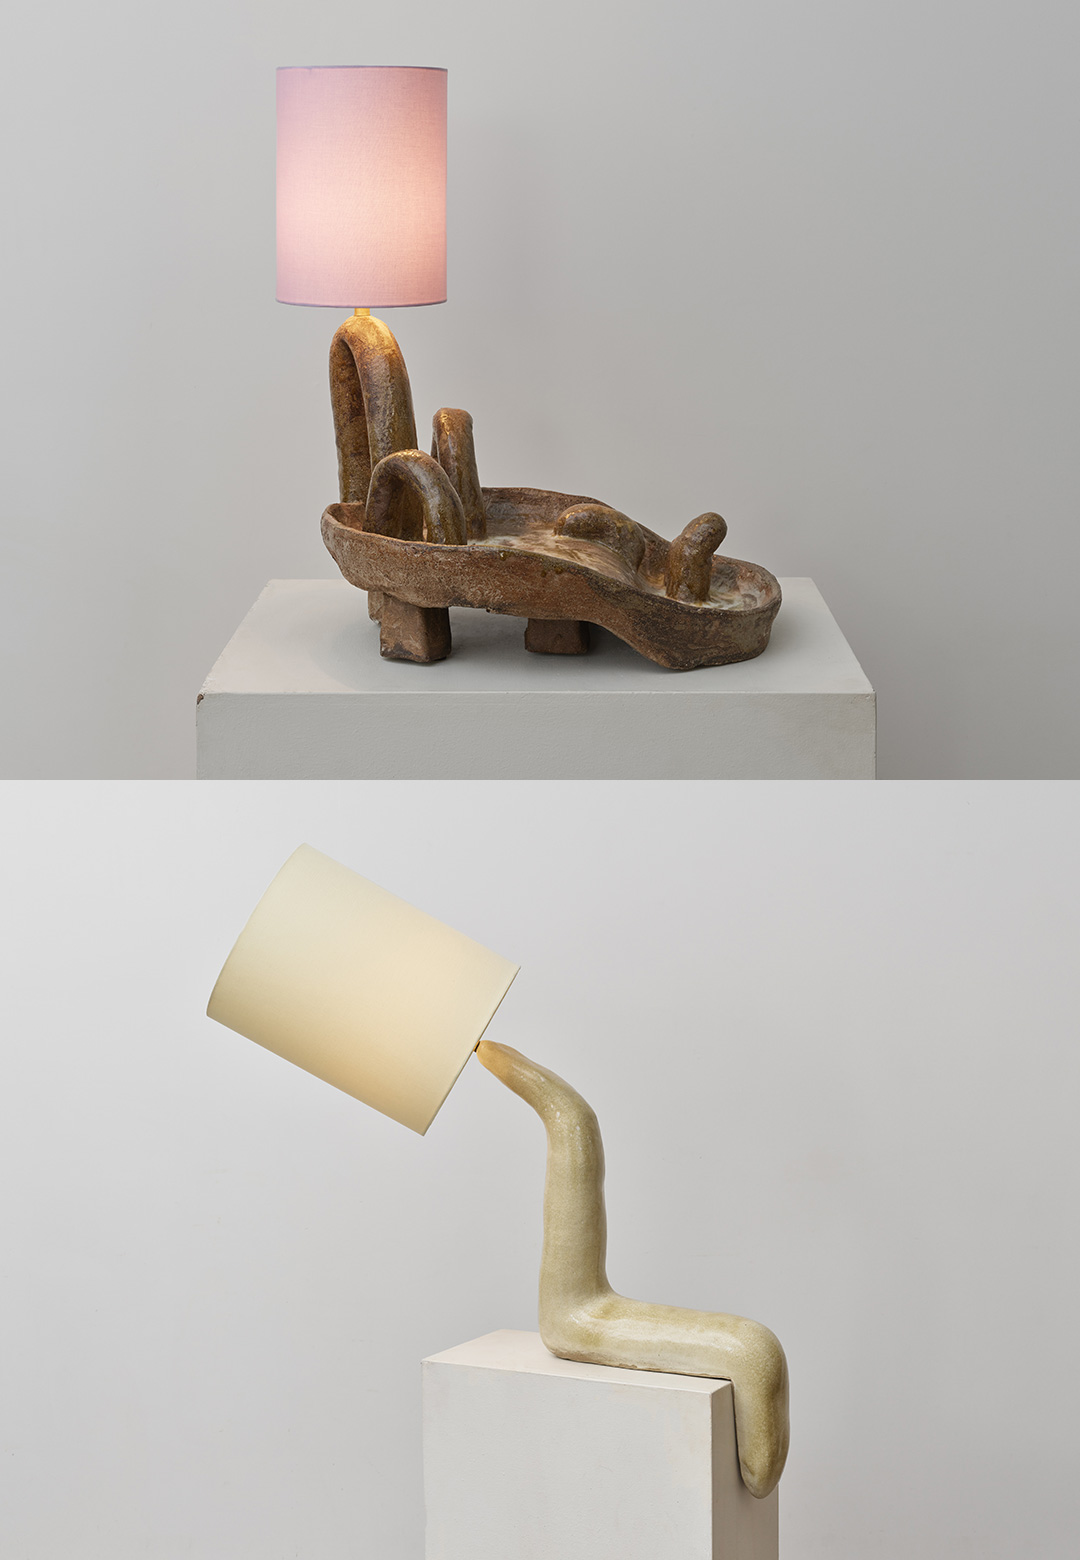 Carmen D’Apollonio crafts anthropomorphic lamps imbued with familiar human postures